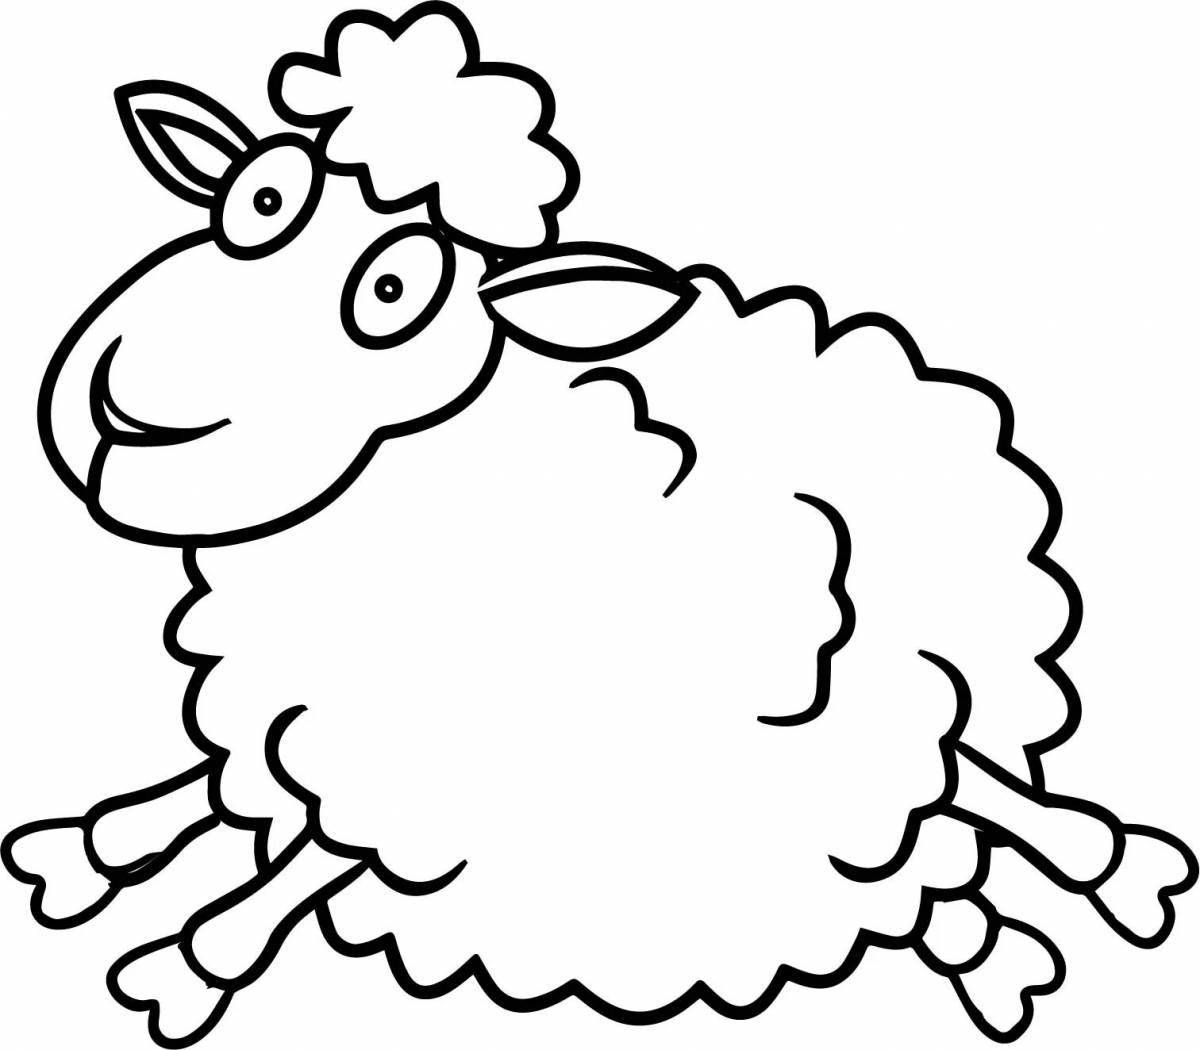 Cute sheep coloring book